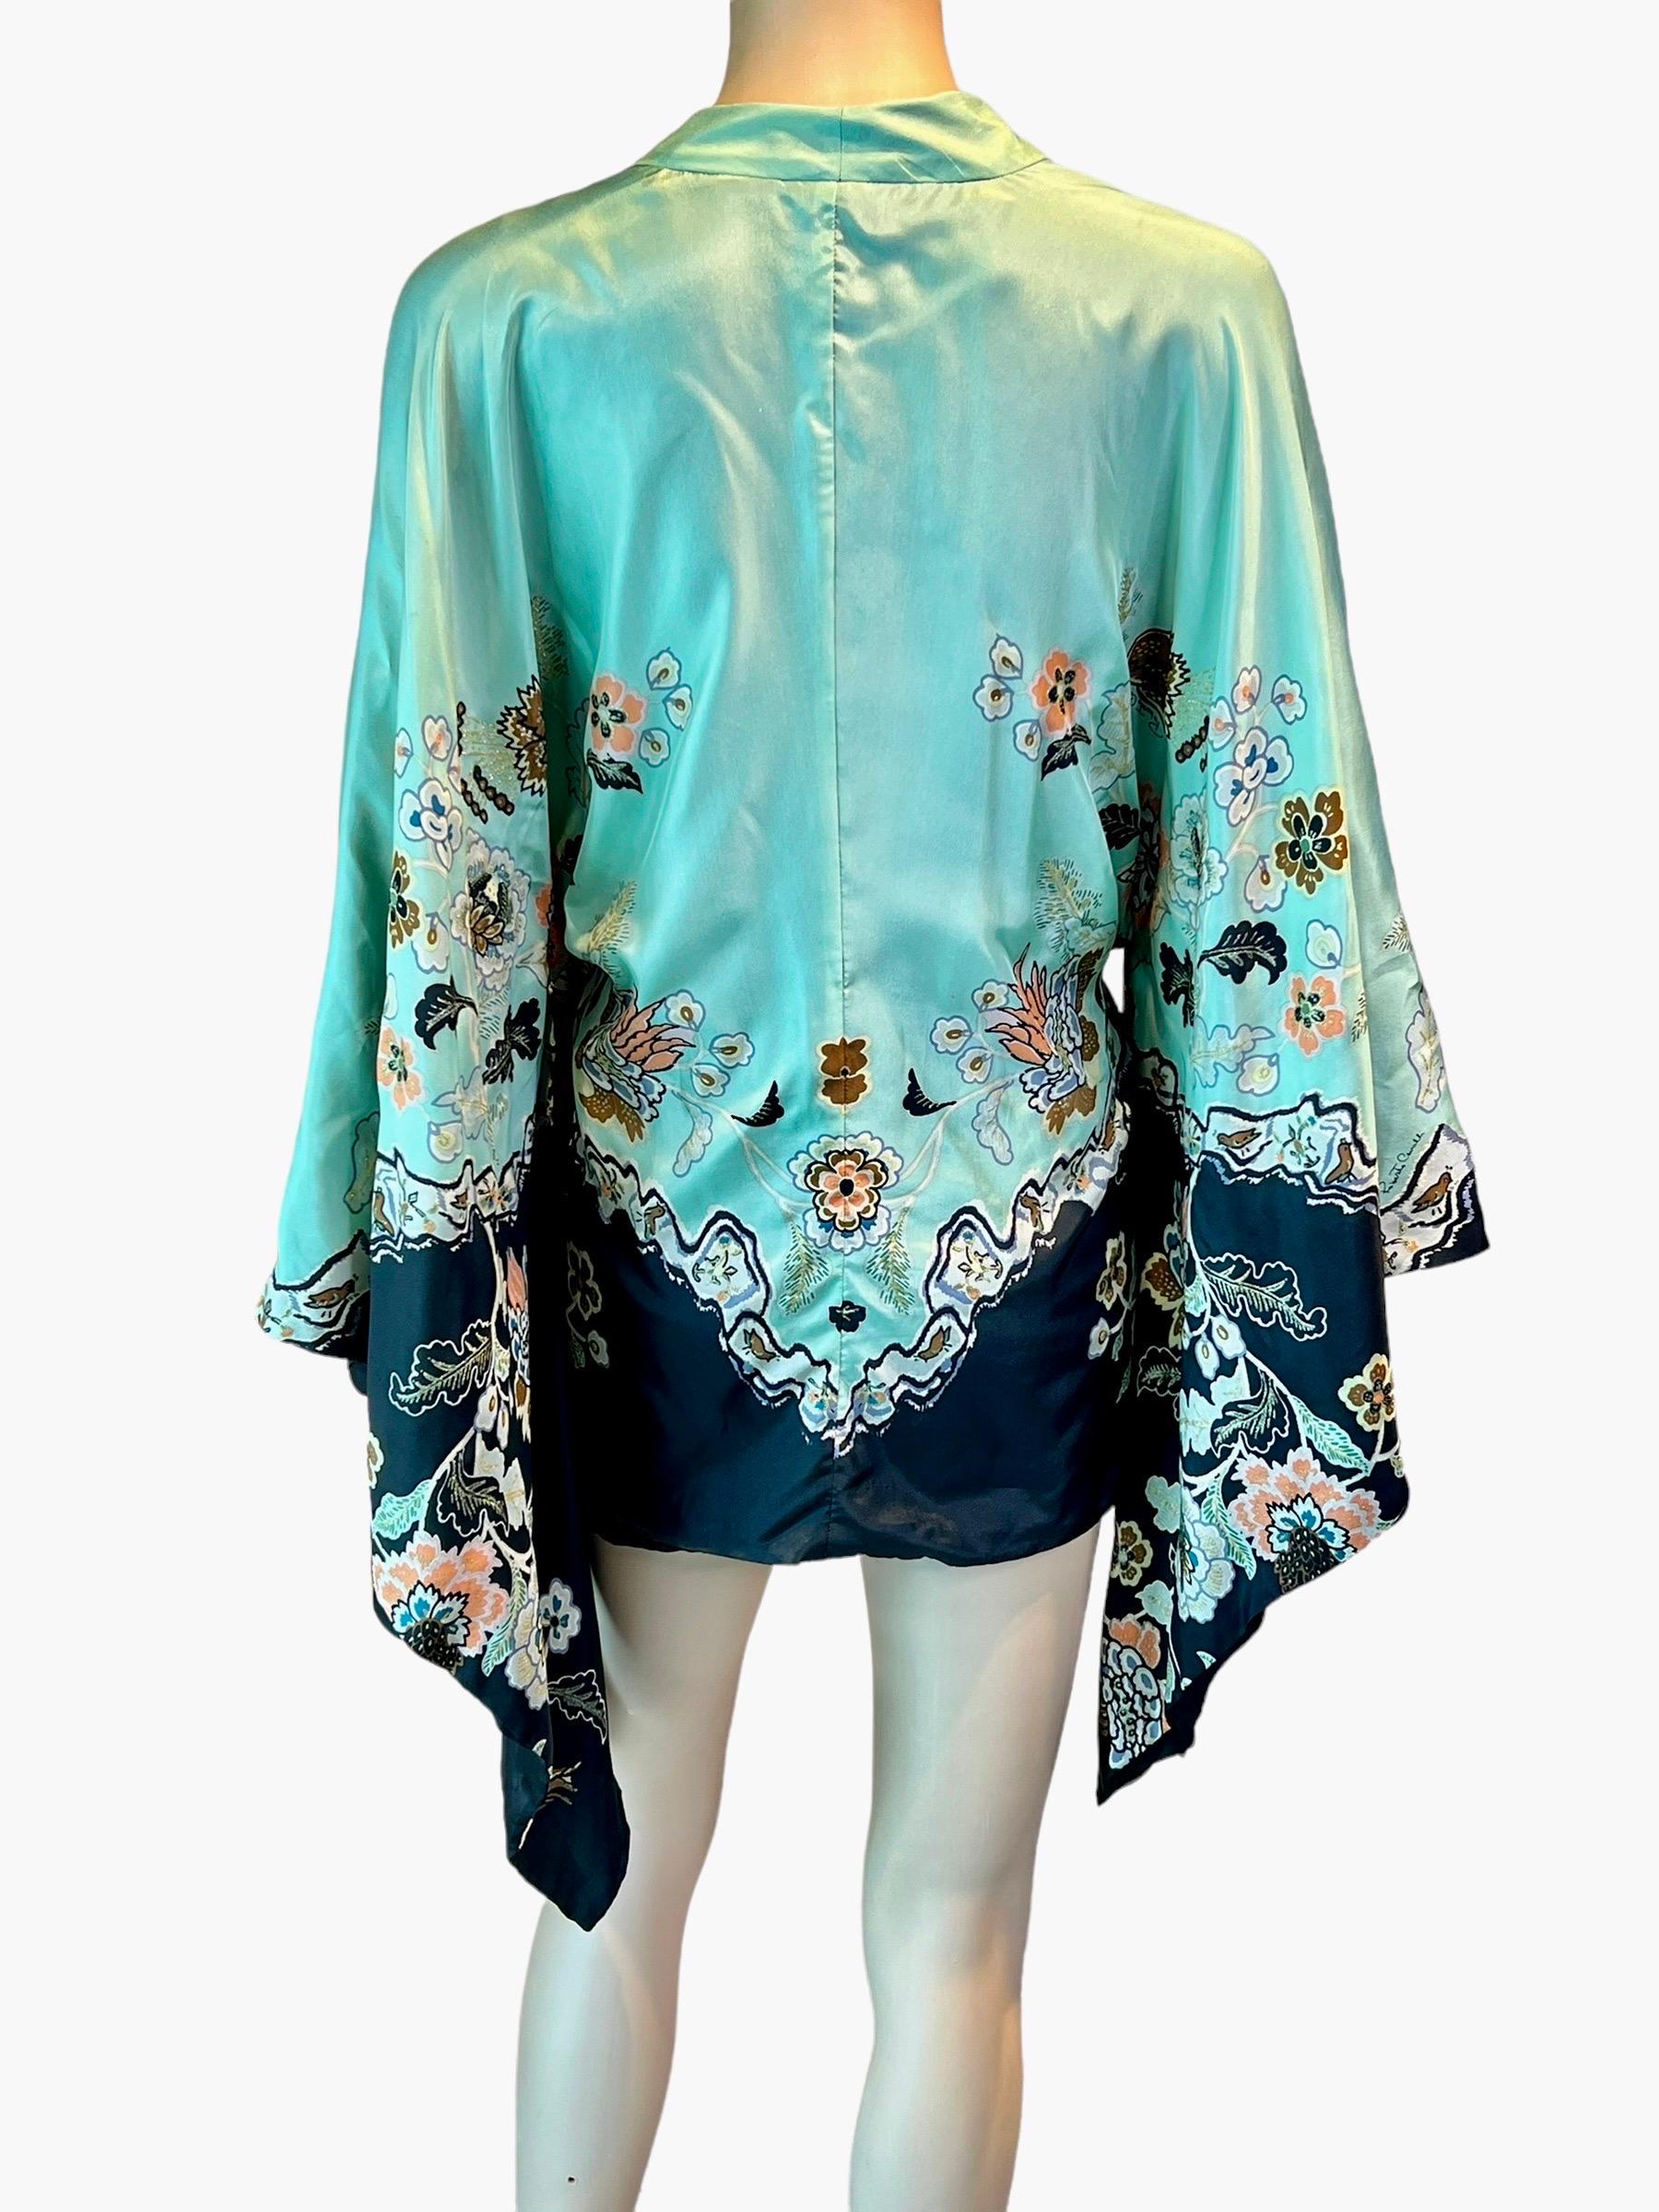 Roberto Cavalli S/S 2003 Runway Chinoiserie Print Silk Kimono Top For Sale 5